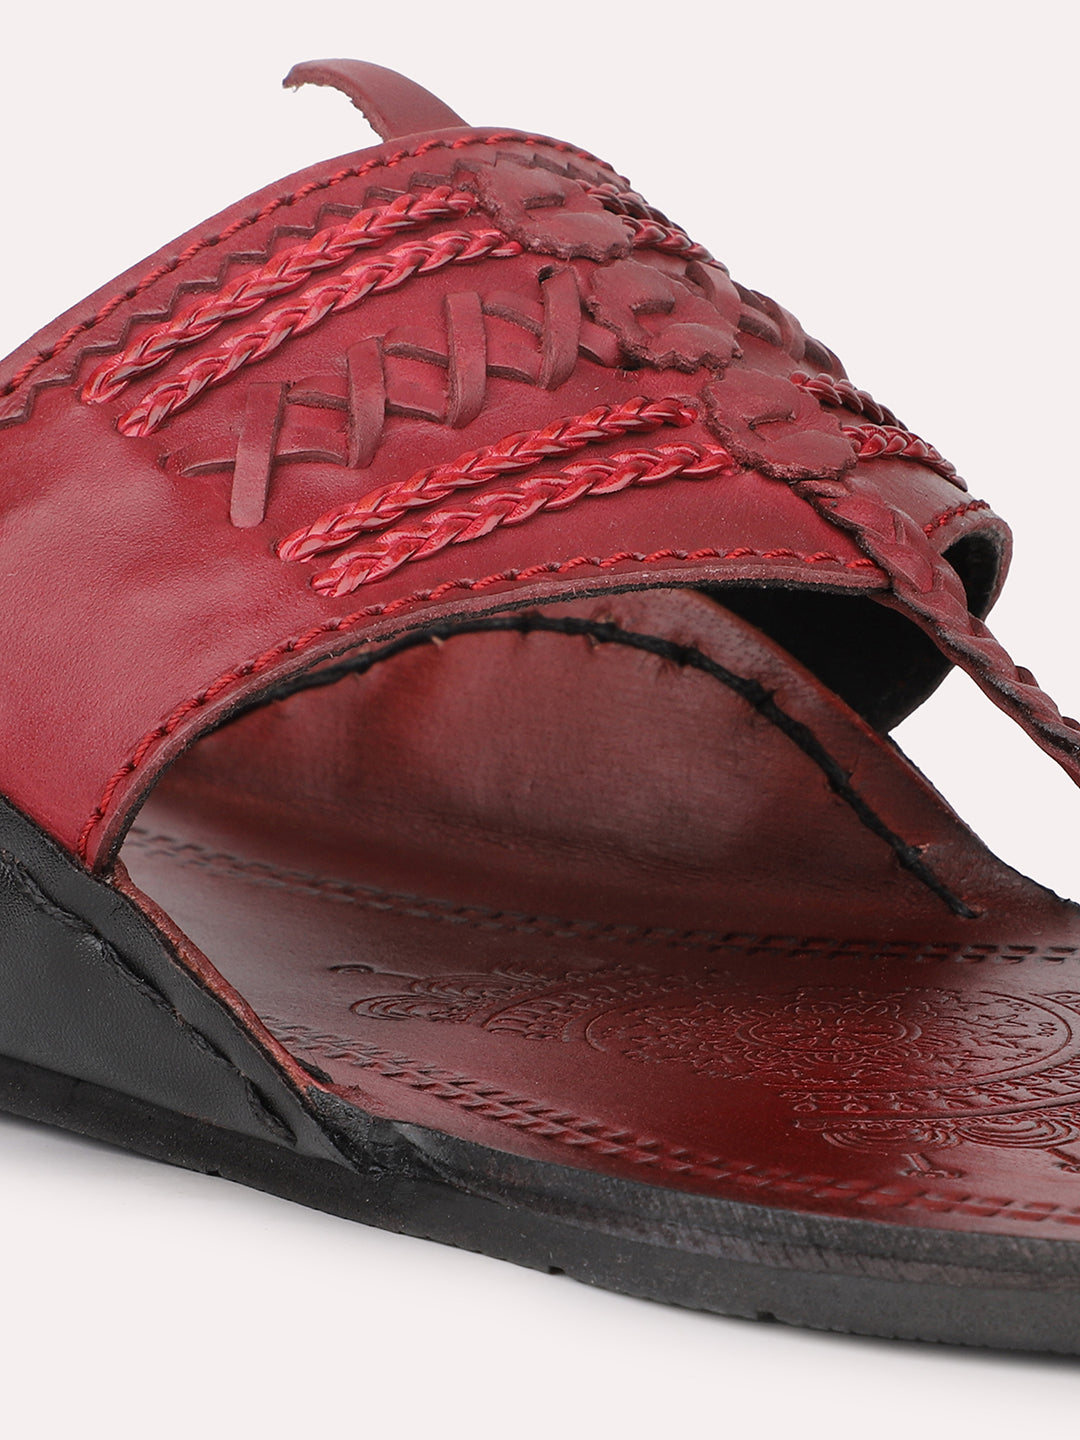 Privo Red Kolhapuris Sandal for Men